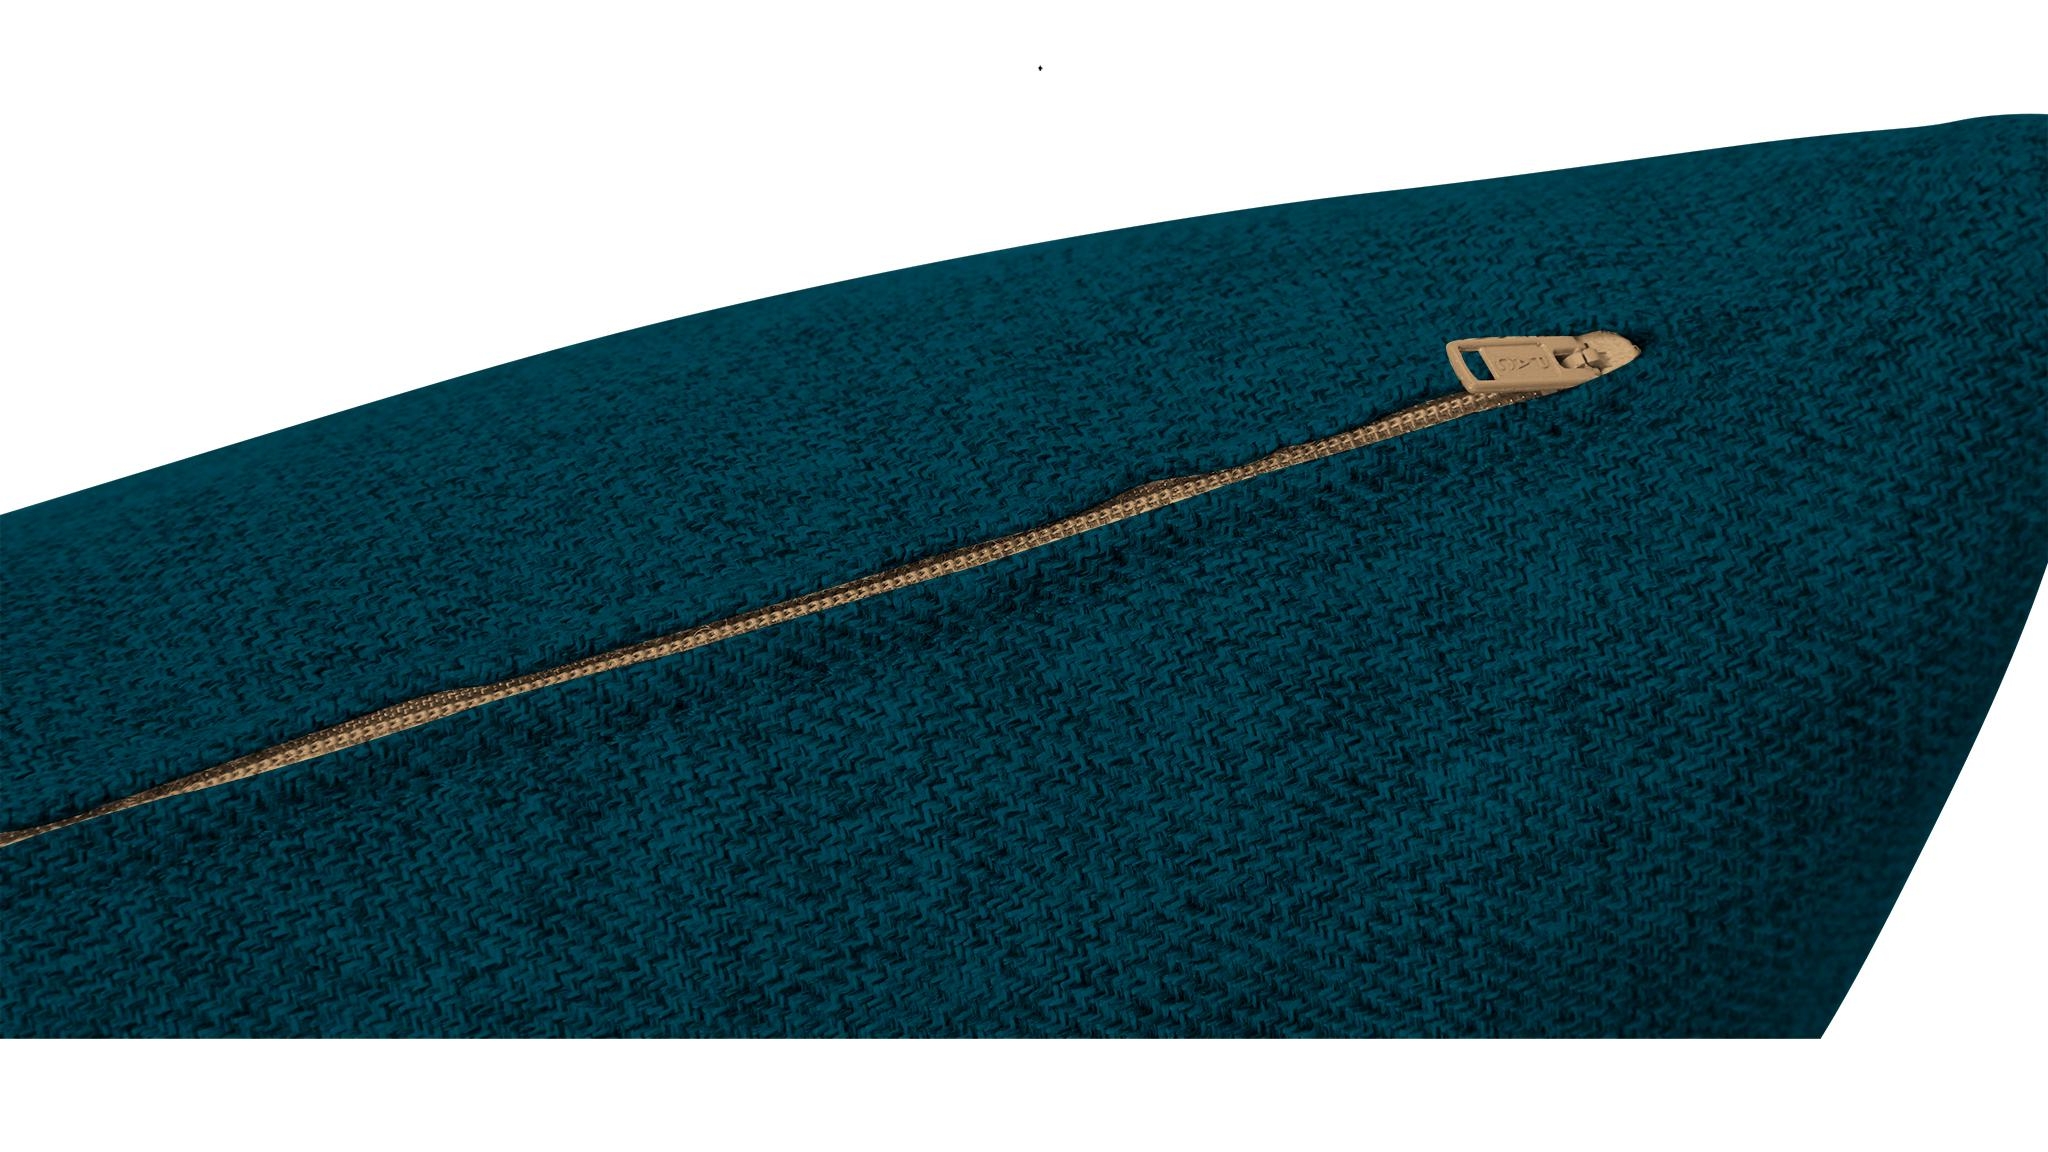 Blue Decorative Mid Century Modern Knife Edge Pillows 18 x 18 (Set of 2) - Key Largo Zenith Teal - Image 1